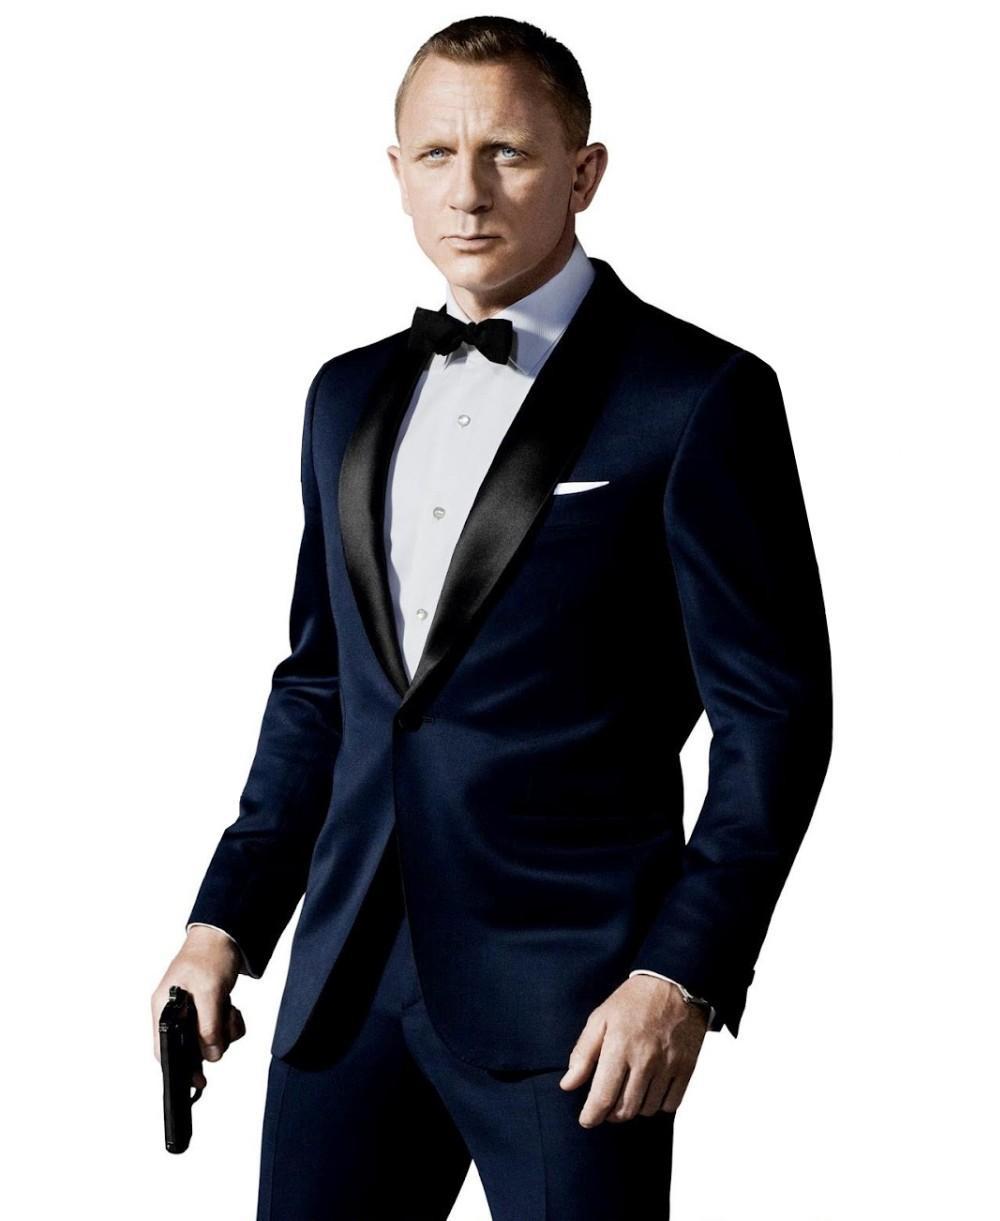 2015 Cheapest Wedding Tuxedo James Bond Wedding Suits for men Formal Suit Groom Tuxedos Tailcoat Best Men Suits Groomsme( Jacket+Pants+Tie) (2)